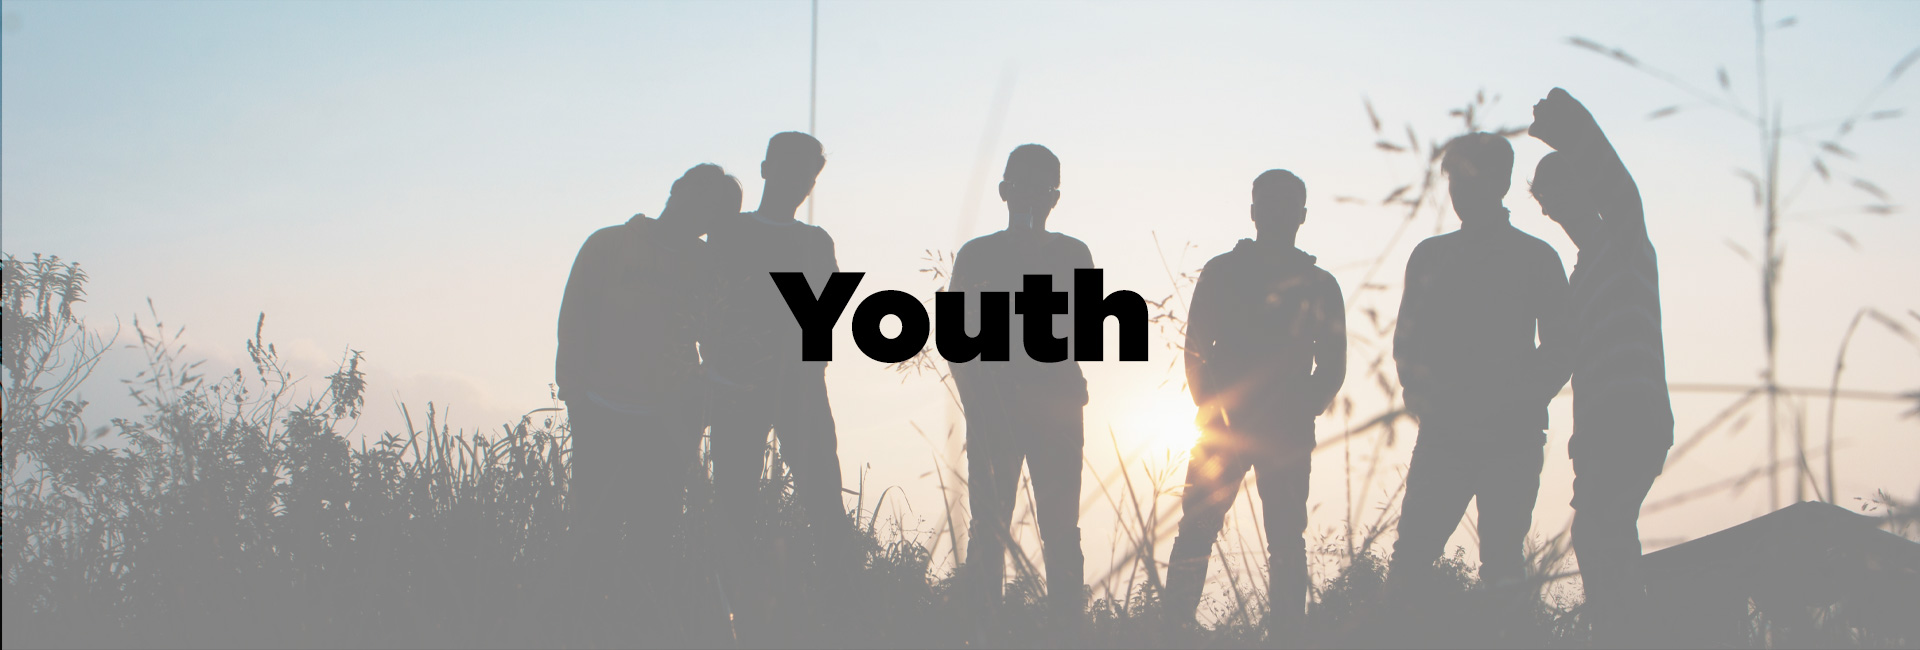 youth-header